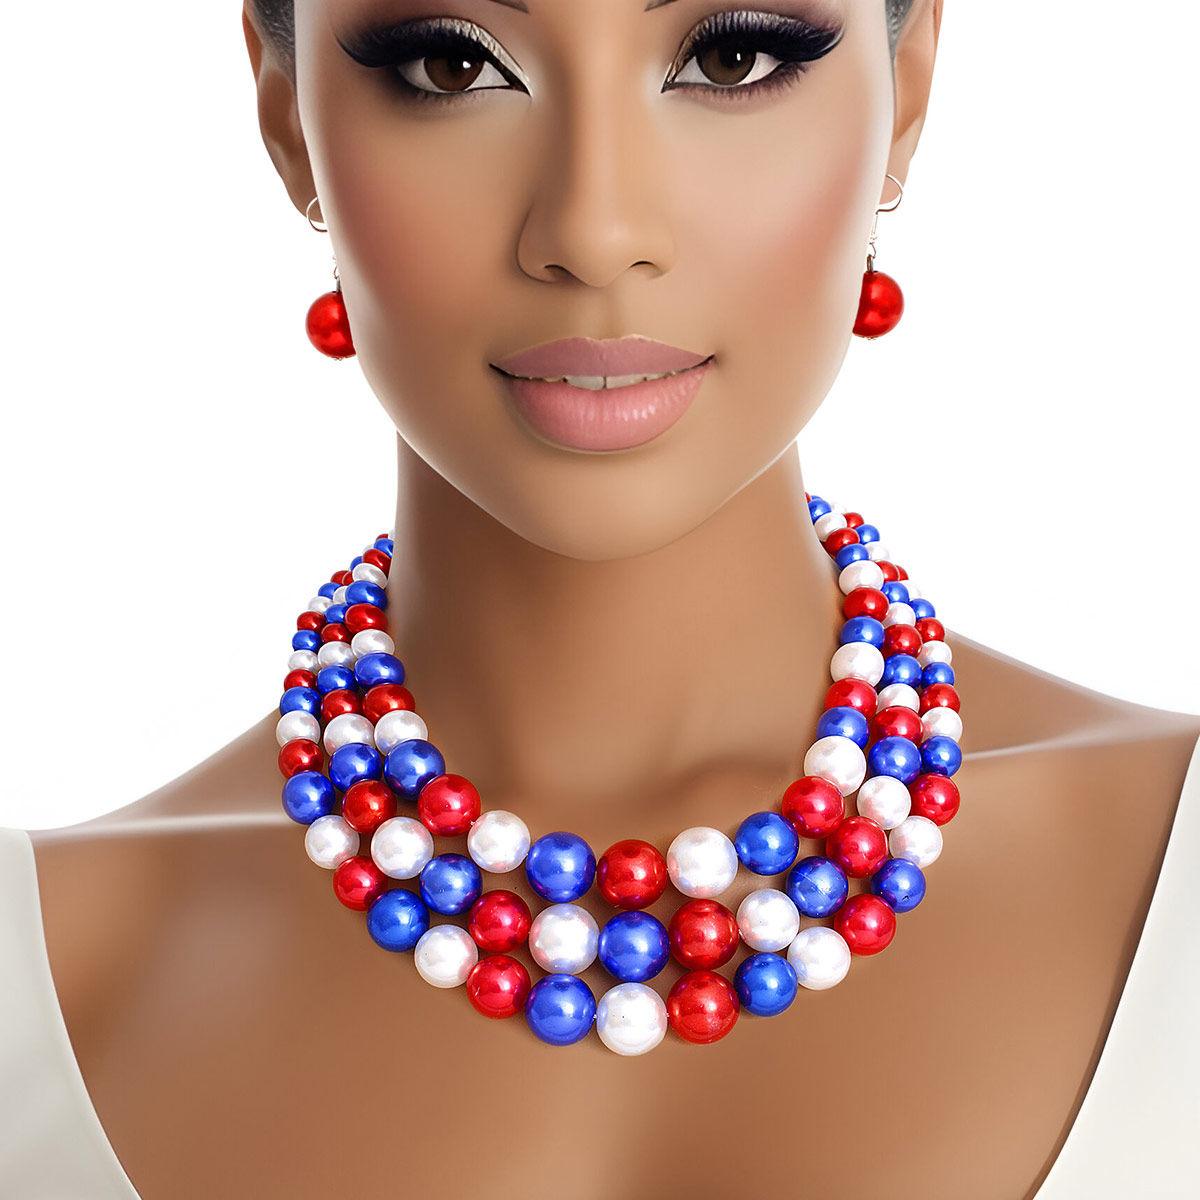 Patriotic Red White & Blue Bead Necklace Set - Stylish Americana Jewelry